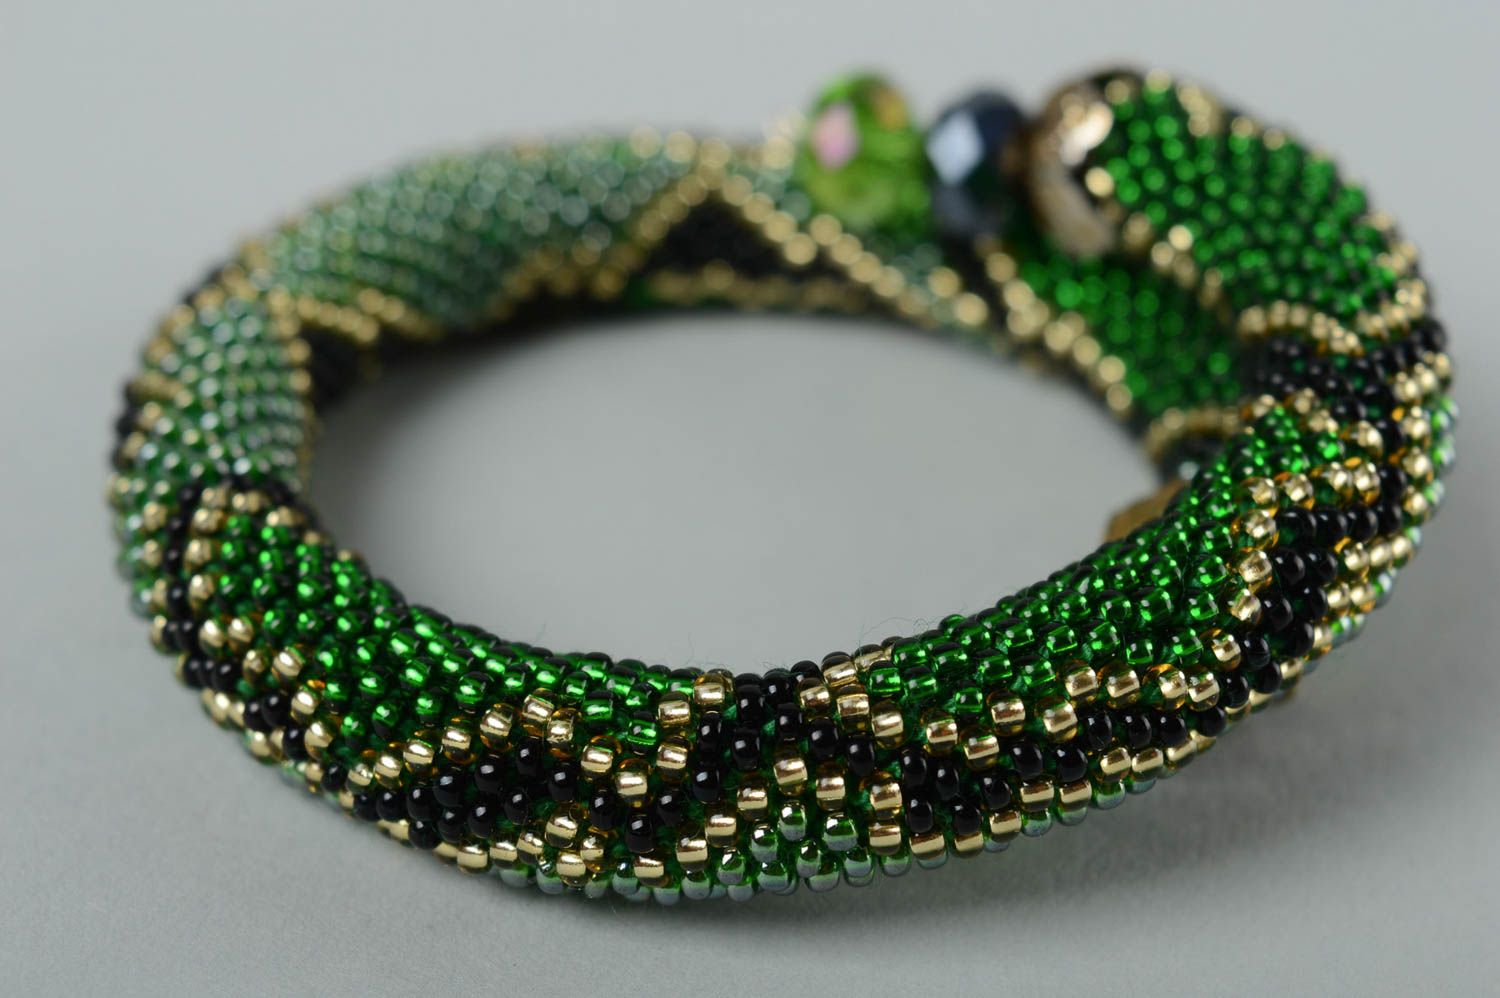 Unusual handmade beaded cord bracelet wrist bracelet designs gifts for her photo 5